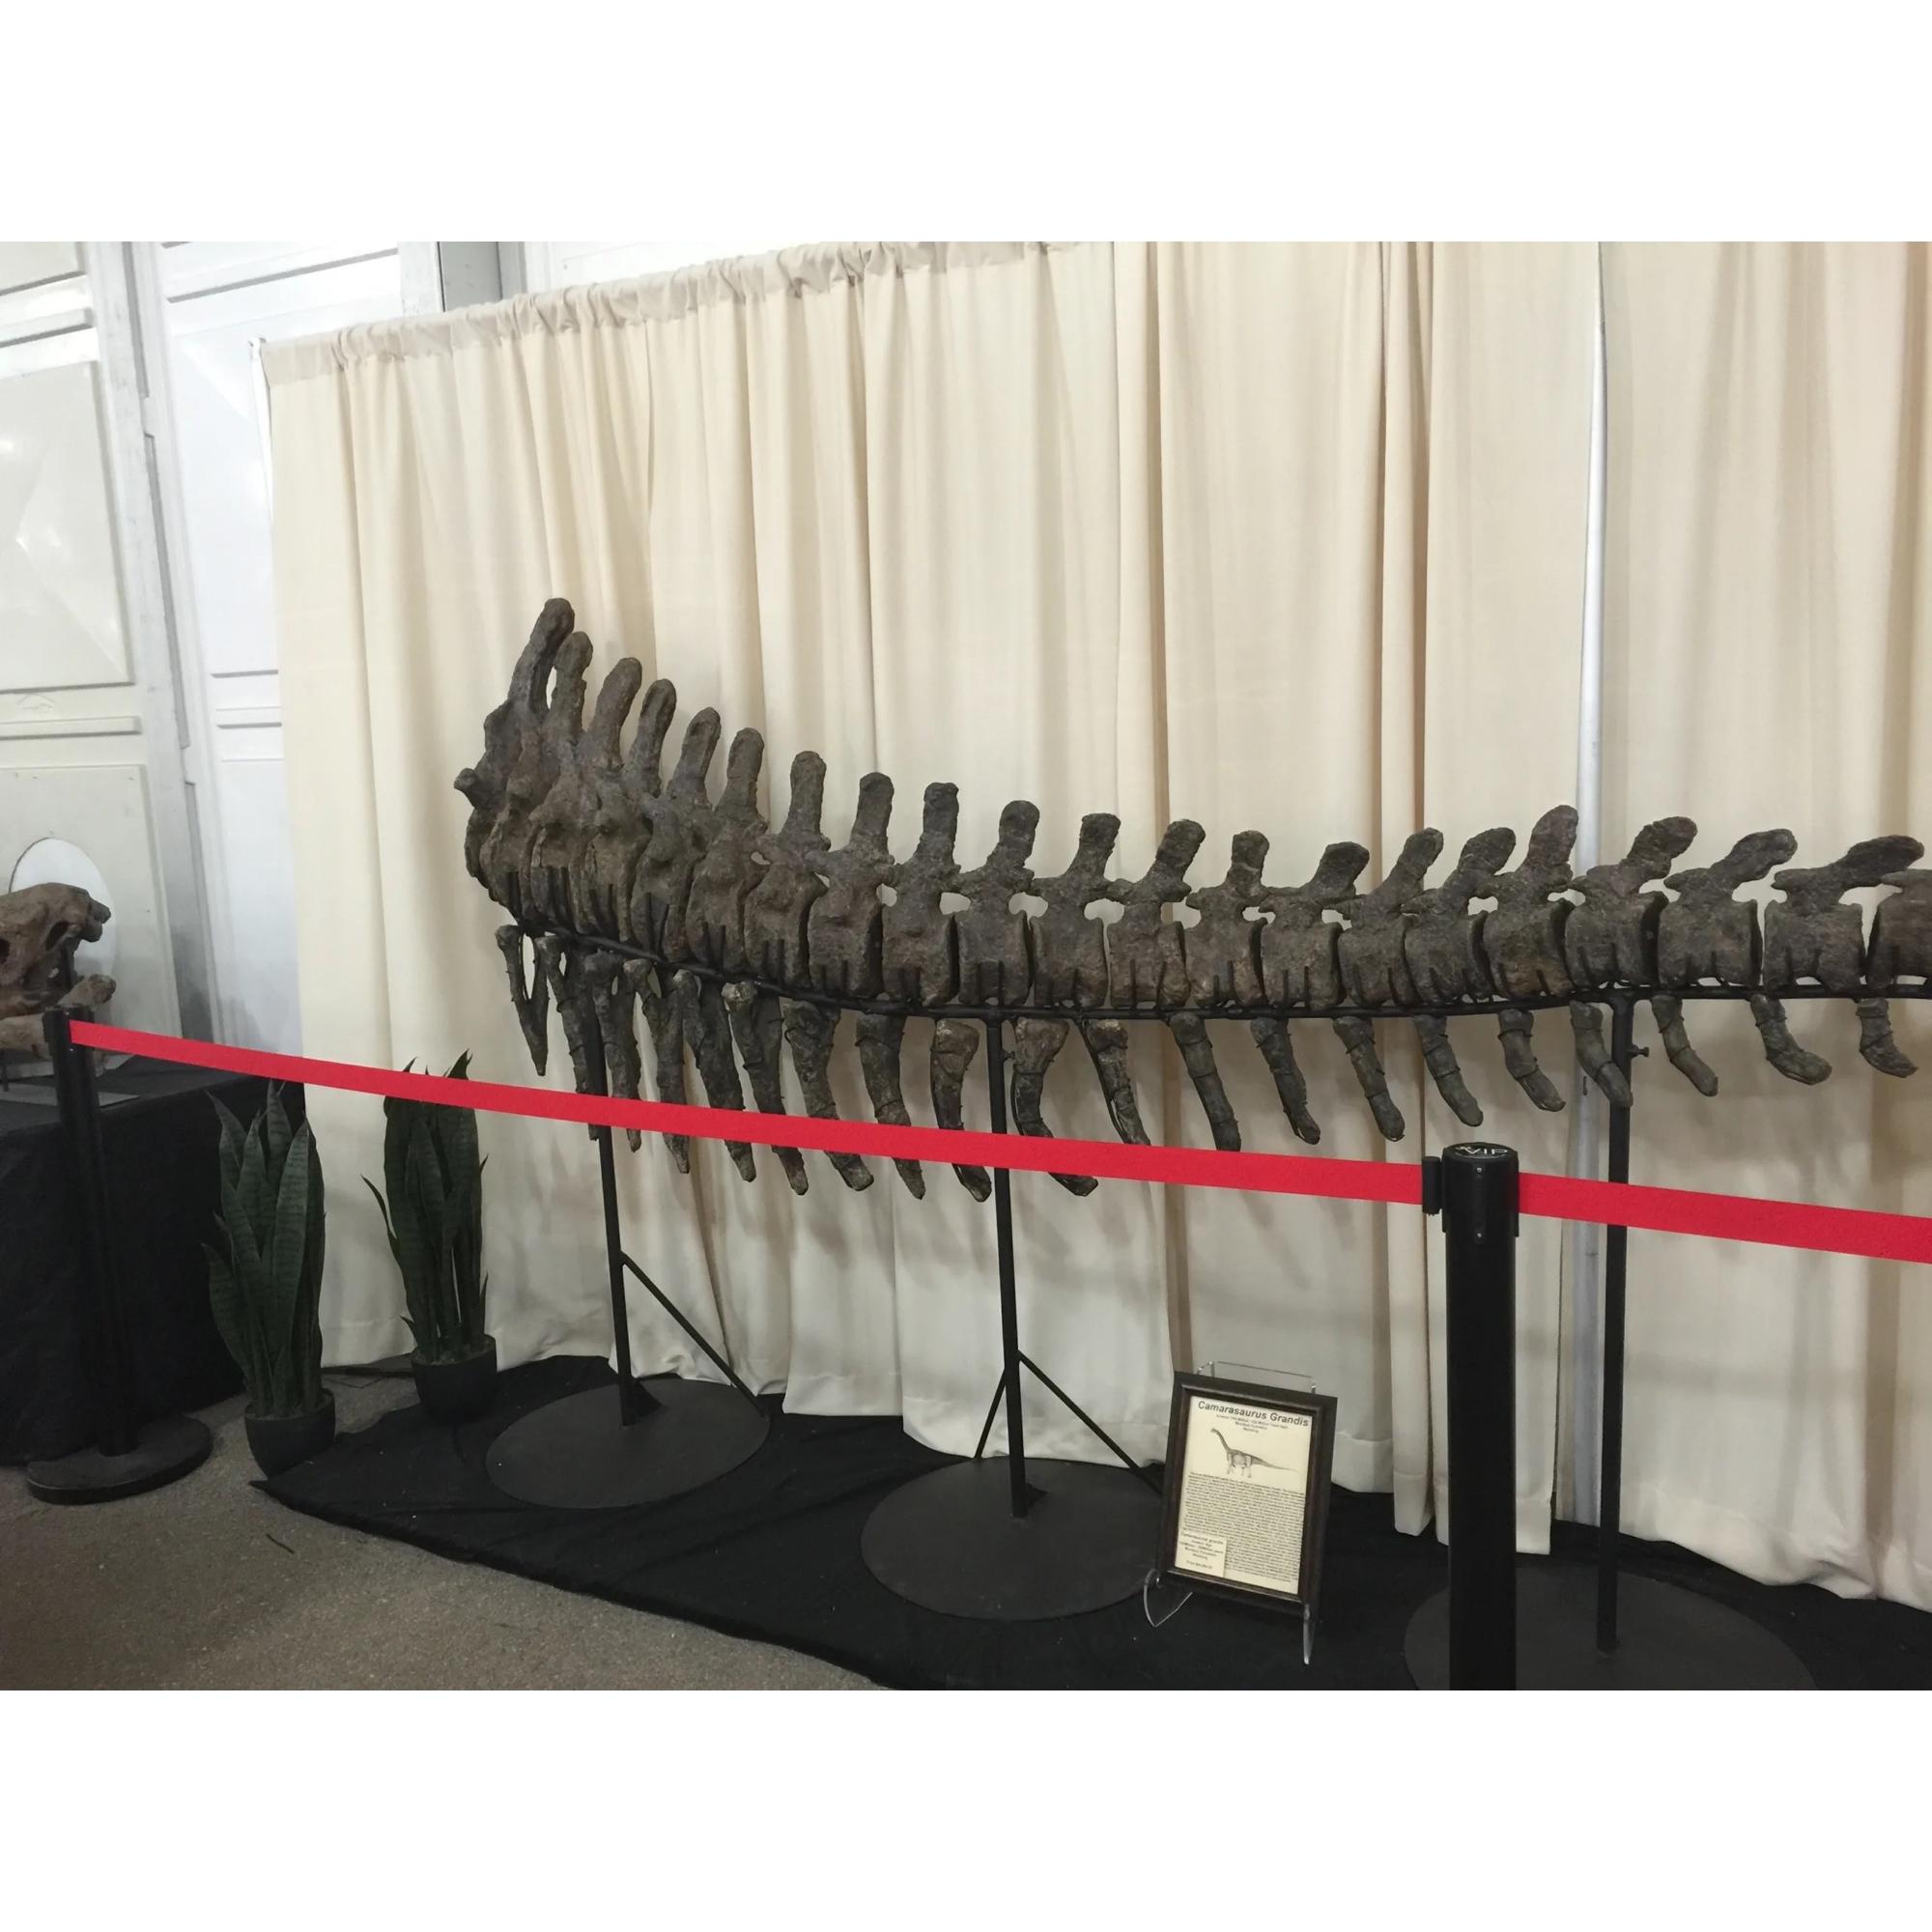 Camarasaurus grandis dino tail measuring 15 feet in length.